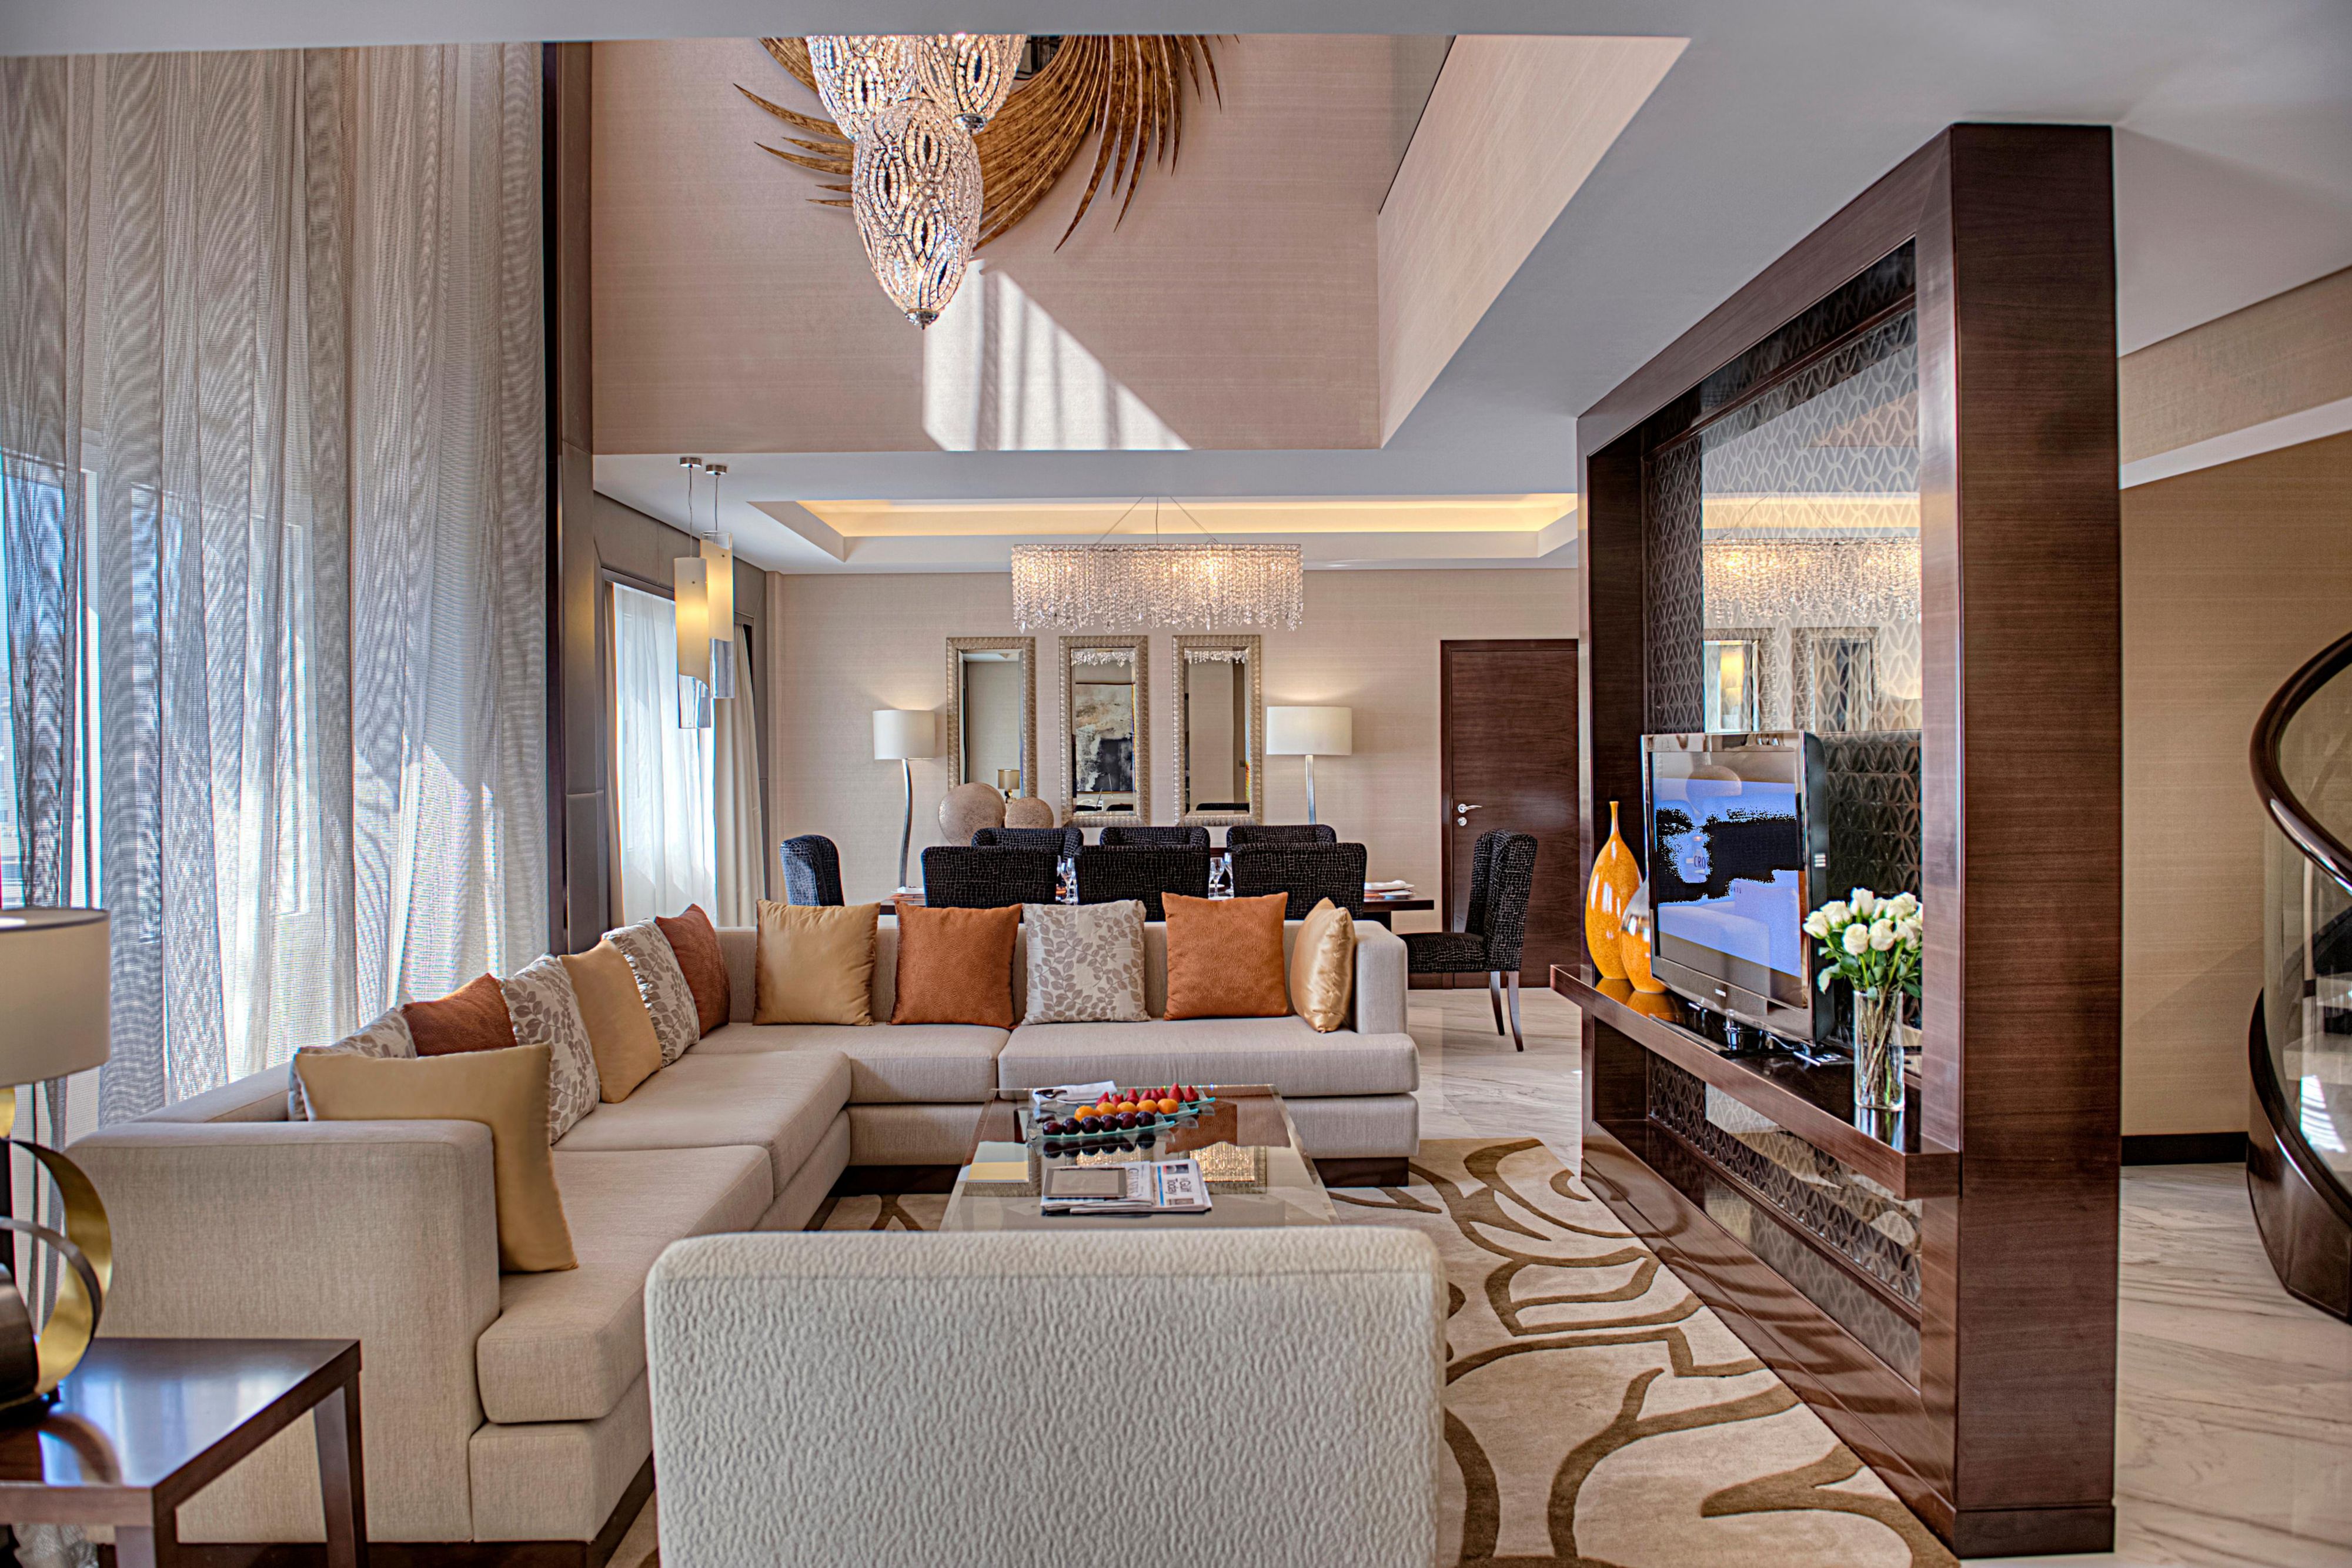 Crowne Plaza Dubai-Deira - 5 star hotel - ROYAL SUITE DUPLEX